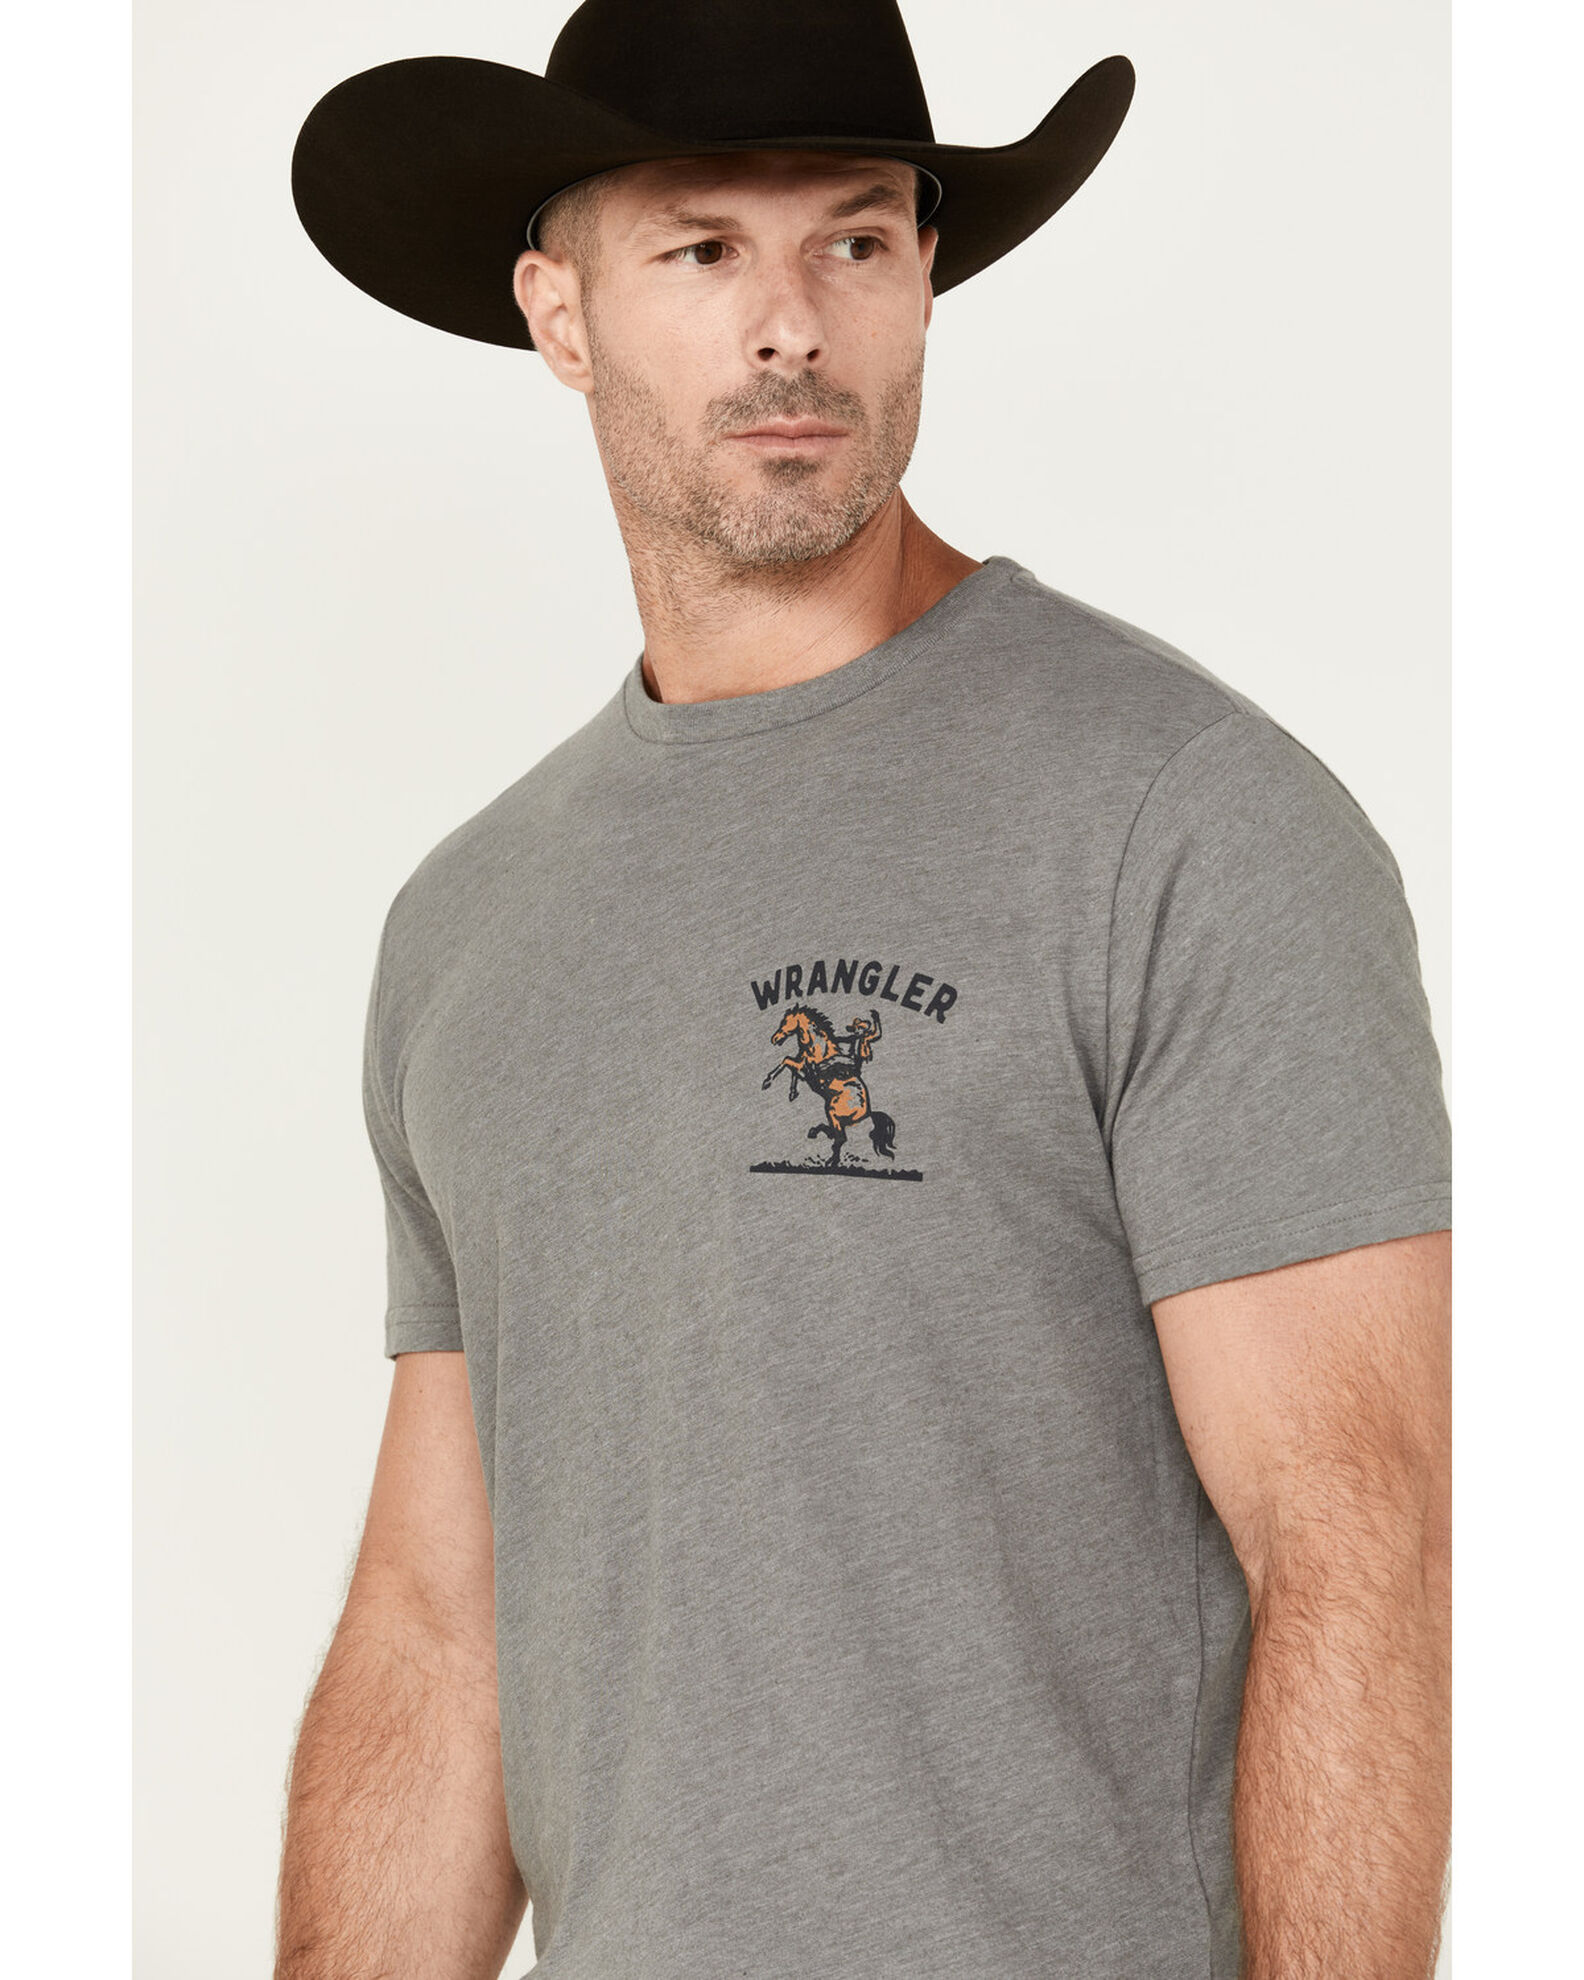 Wrangler Men's Cowboy Logo Short Sleeve Graphic T-Shirt